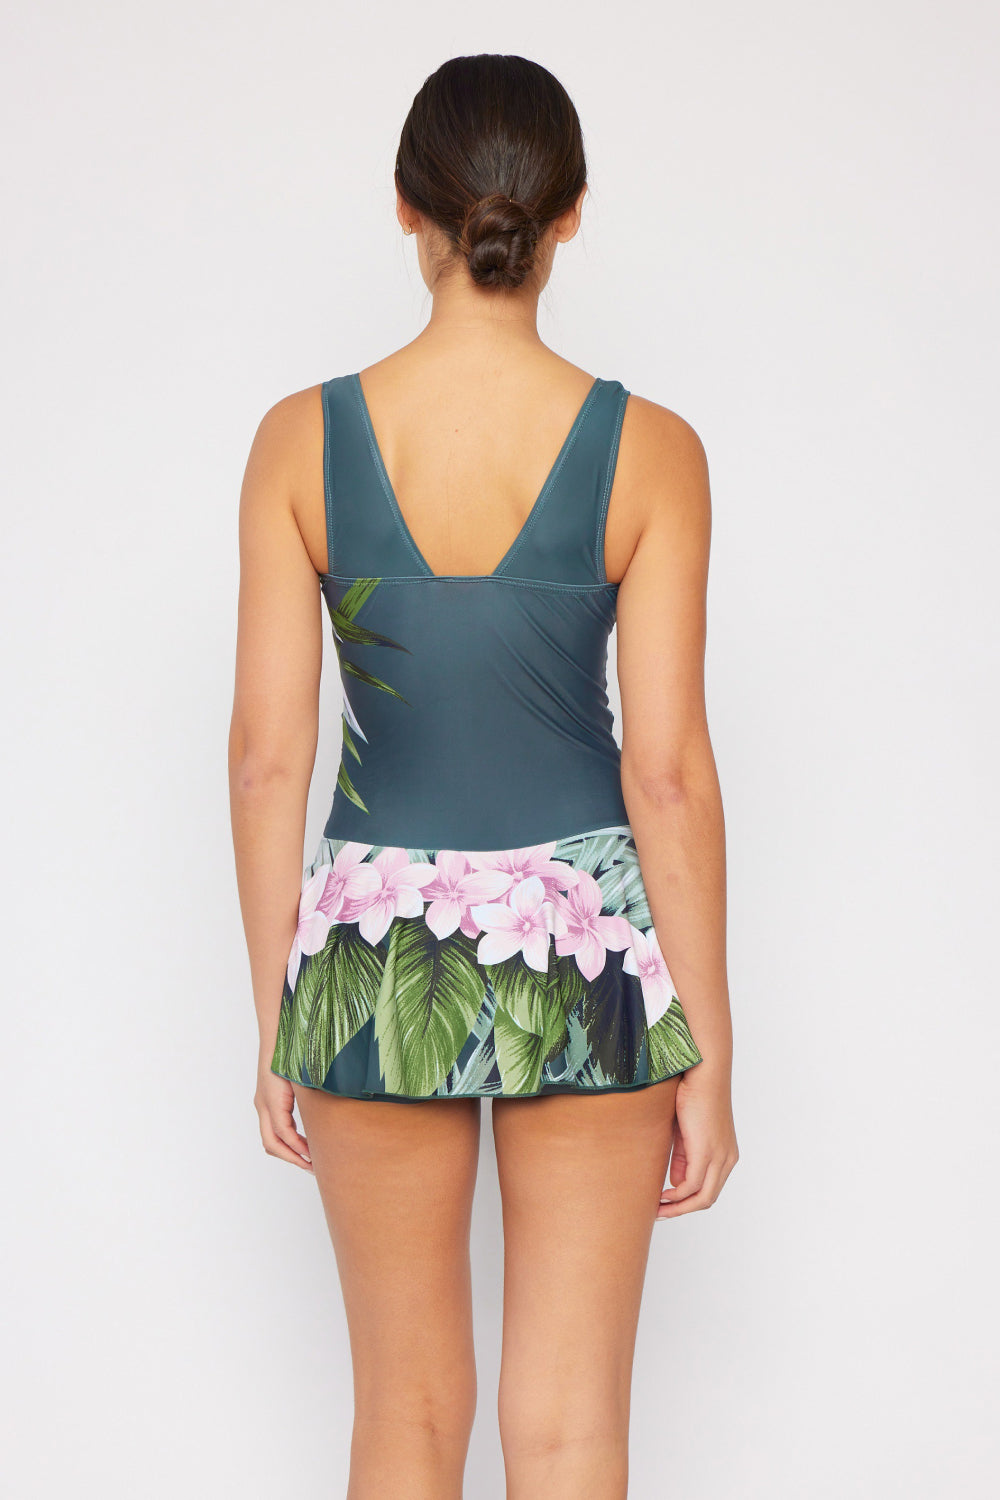 Full Size Clear Waters Swim Dress in Aloha Forest - All Dresses - Swimwear - 10 - 2024